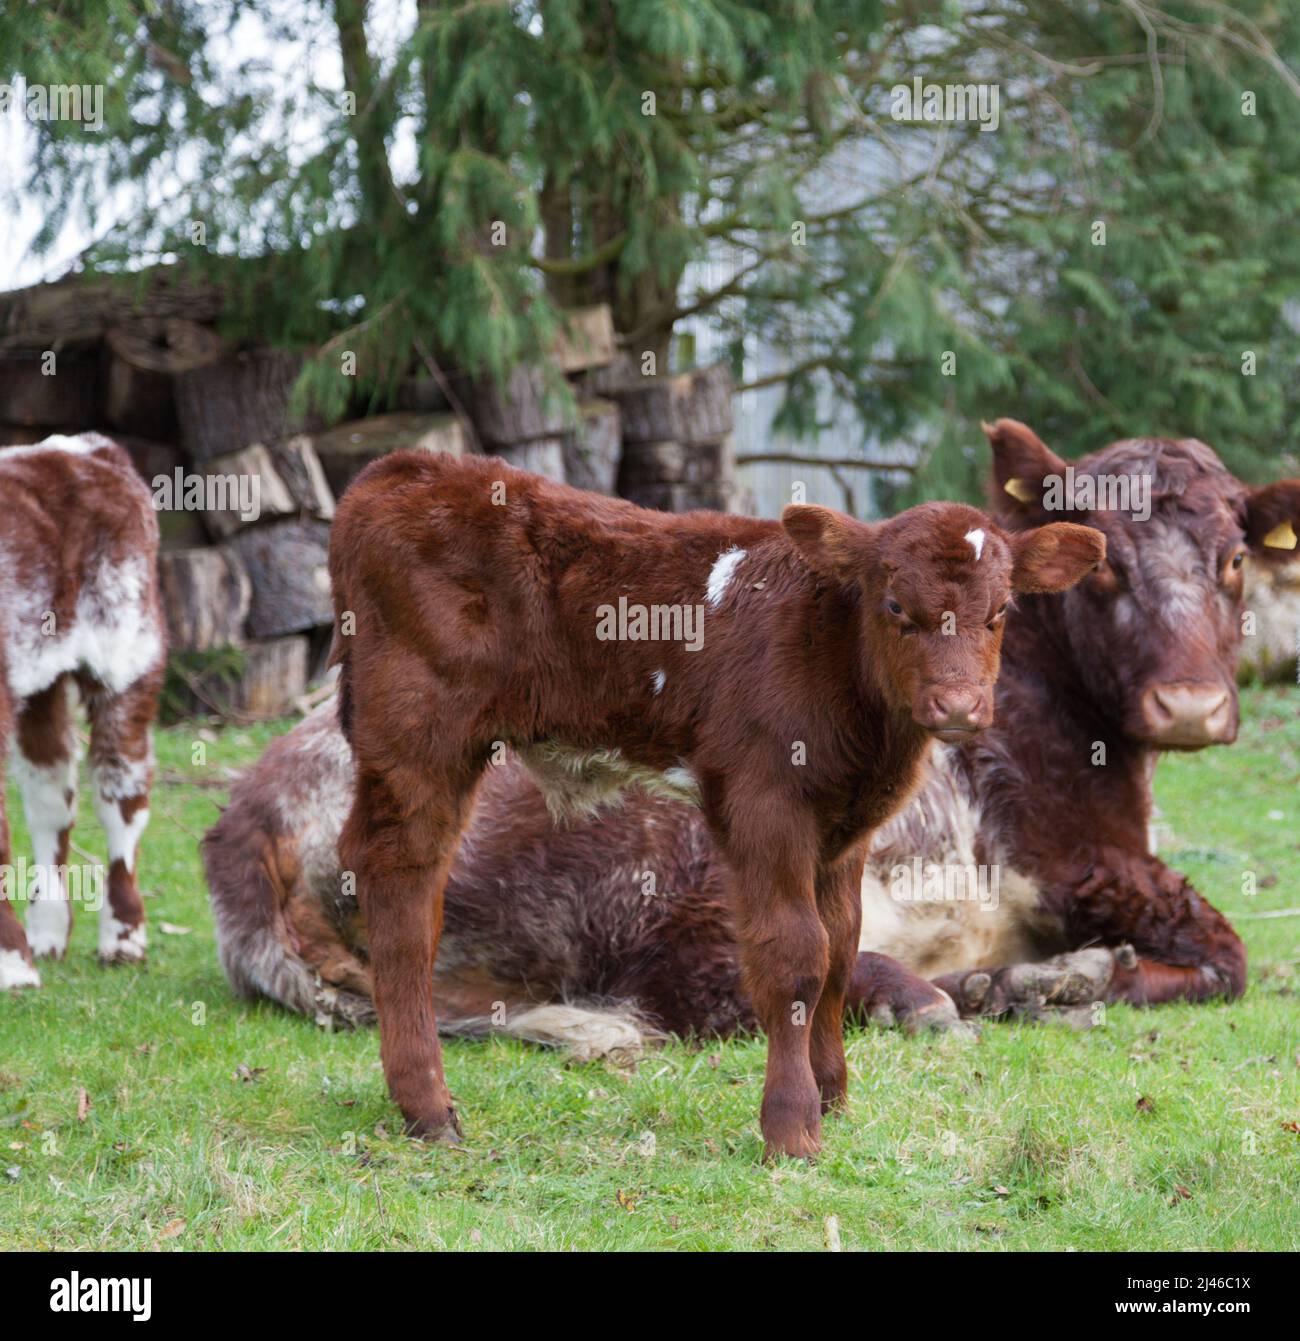 Cow and newborn calf. Stock Photo